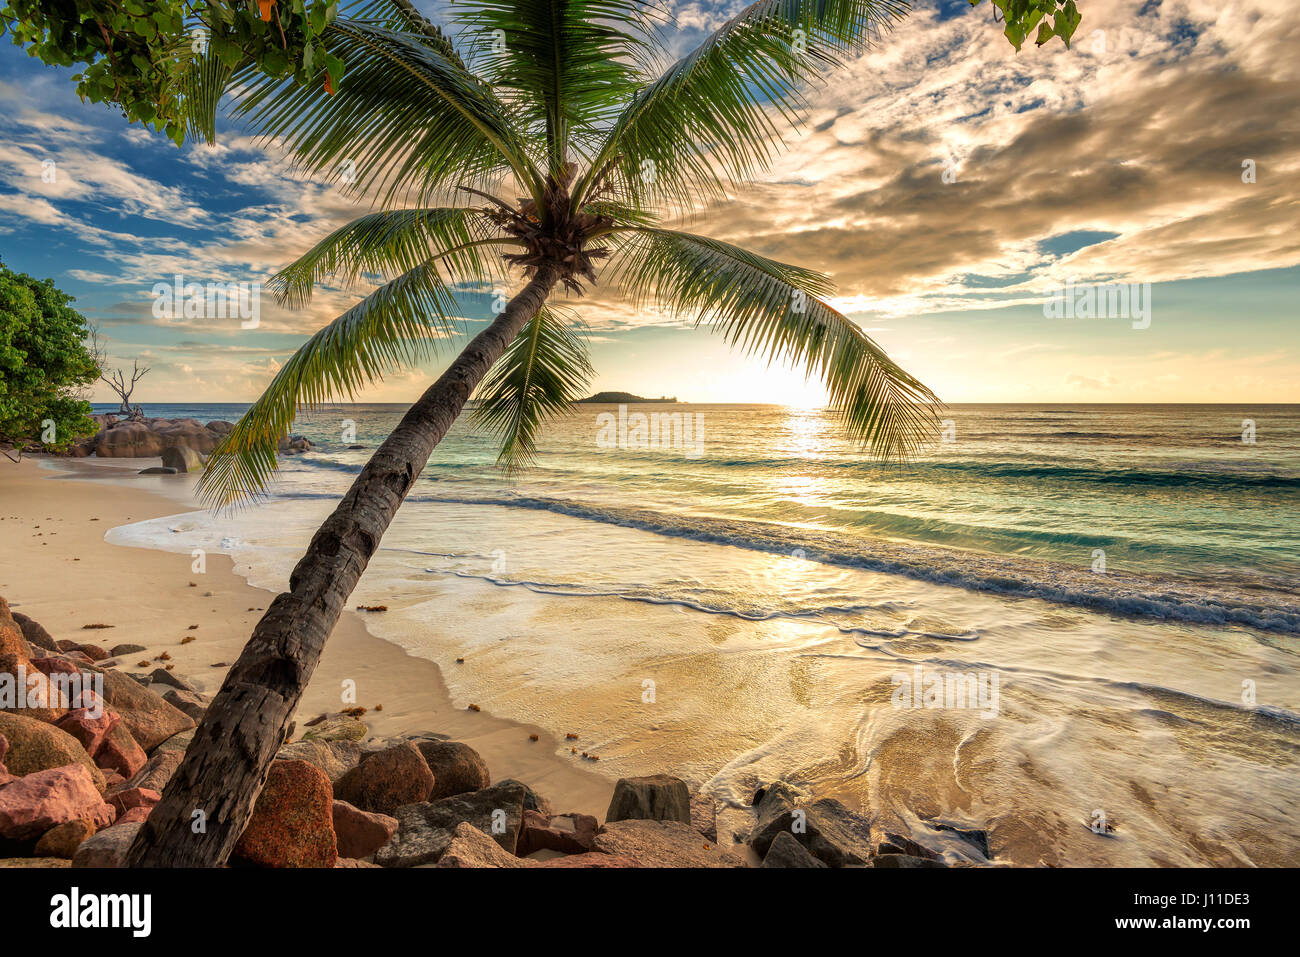 Arte bel tramonto in spiaggia tropicale. Foto Stock